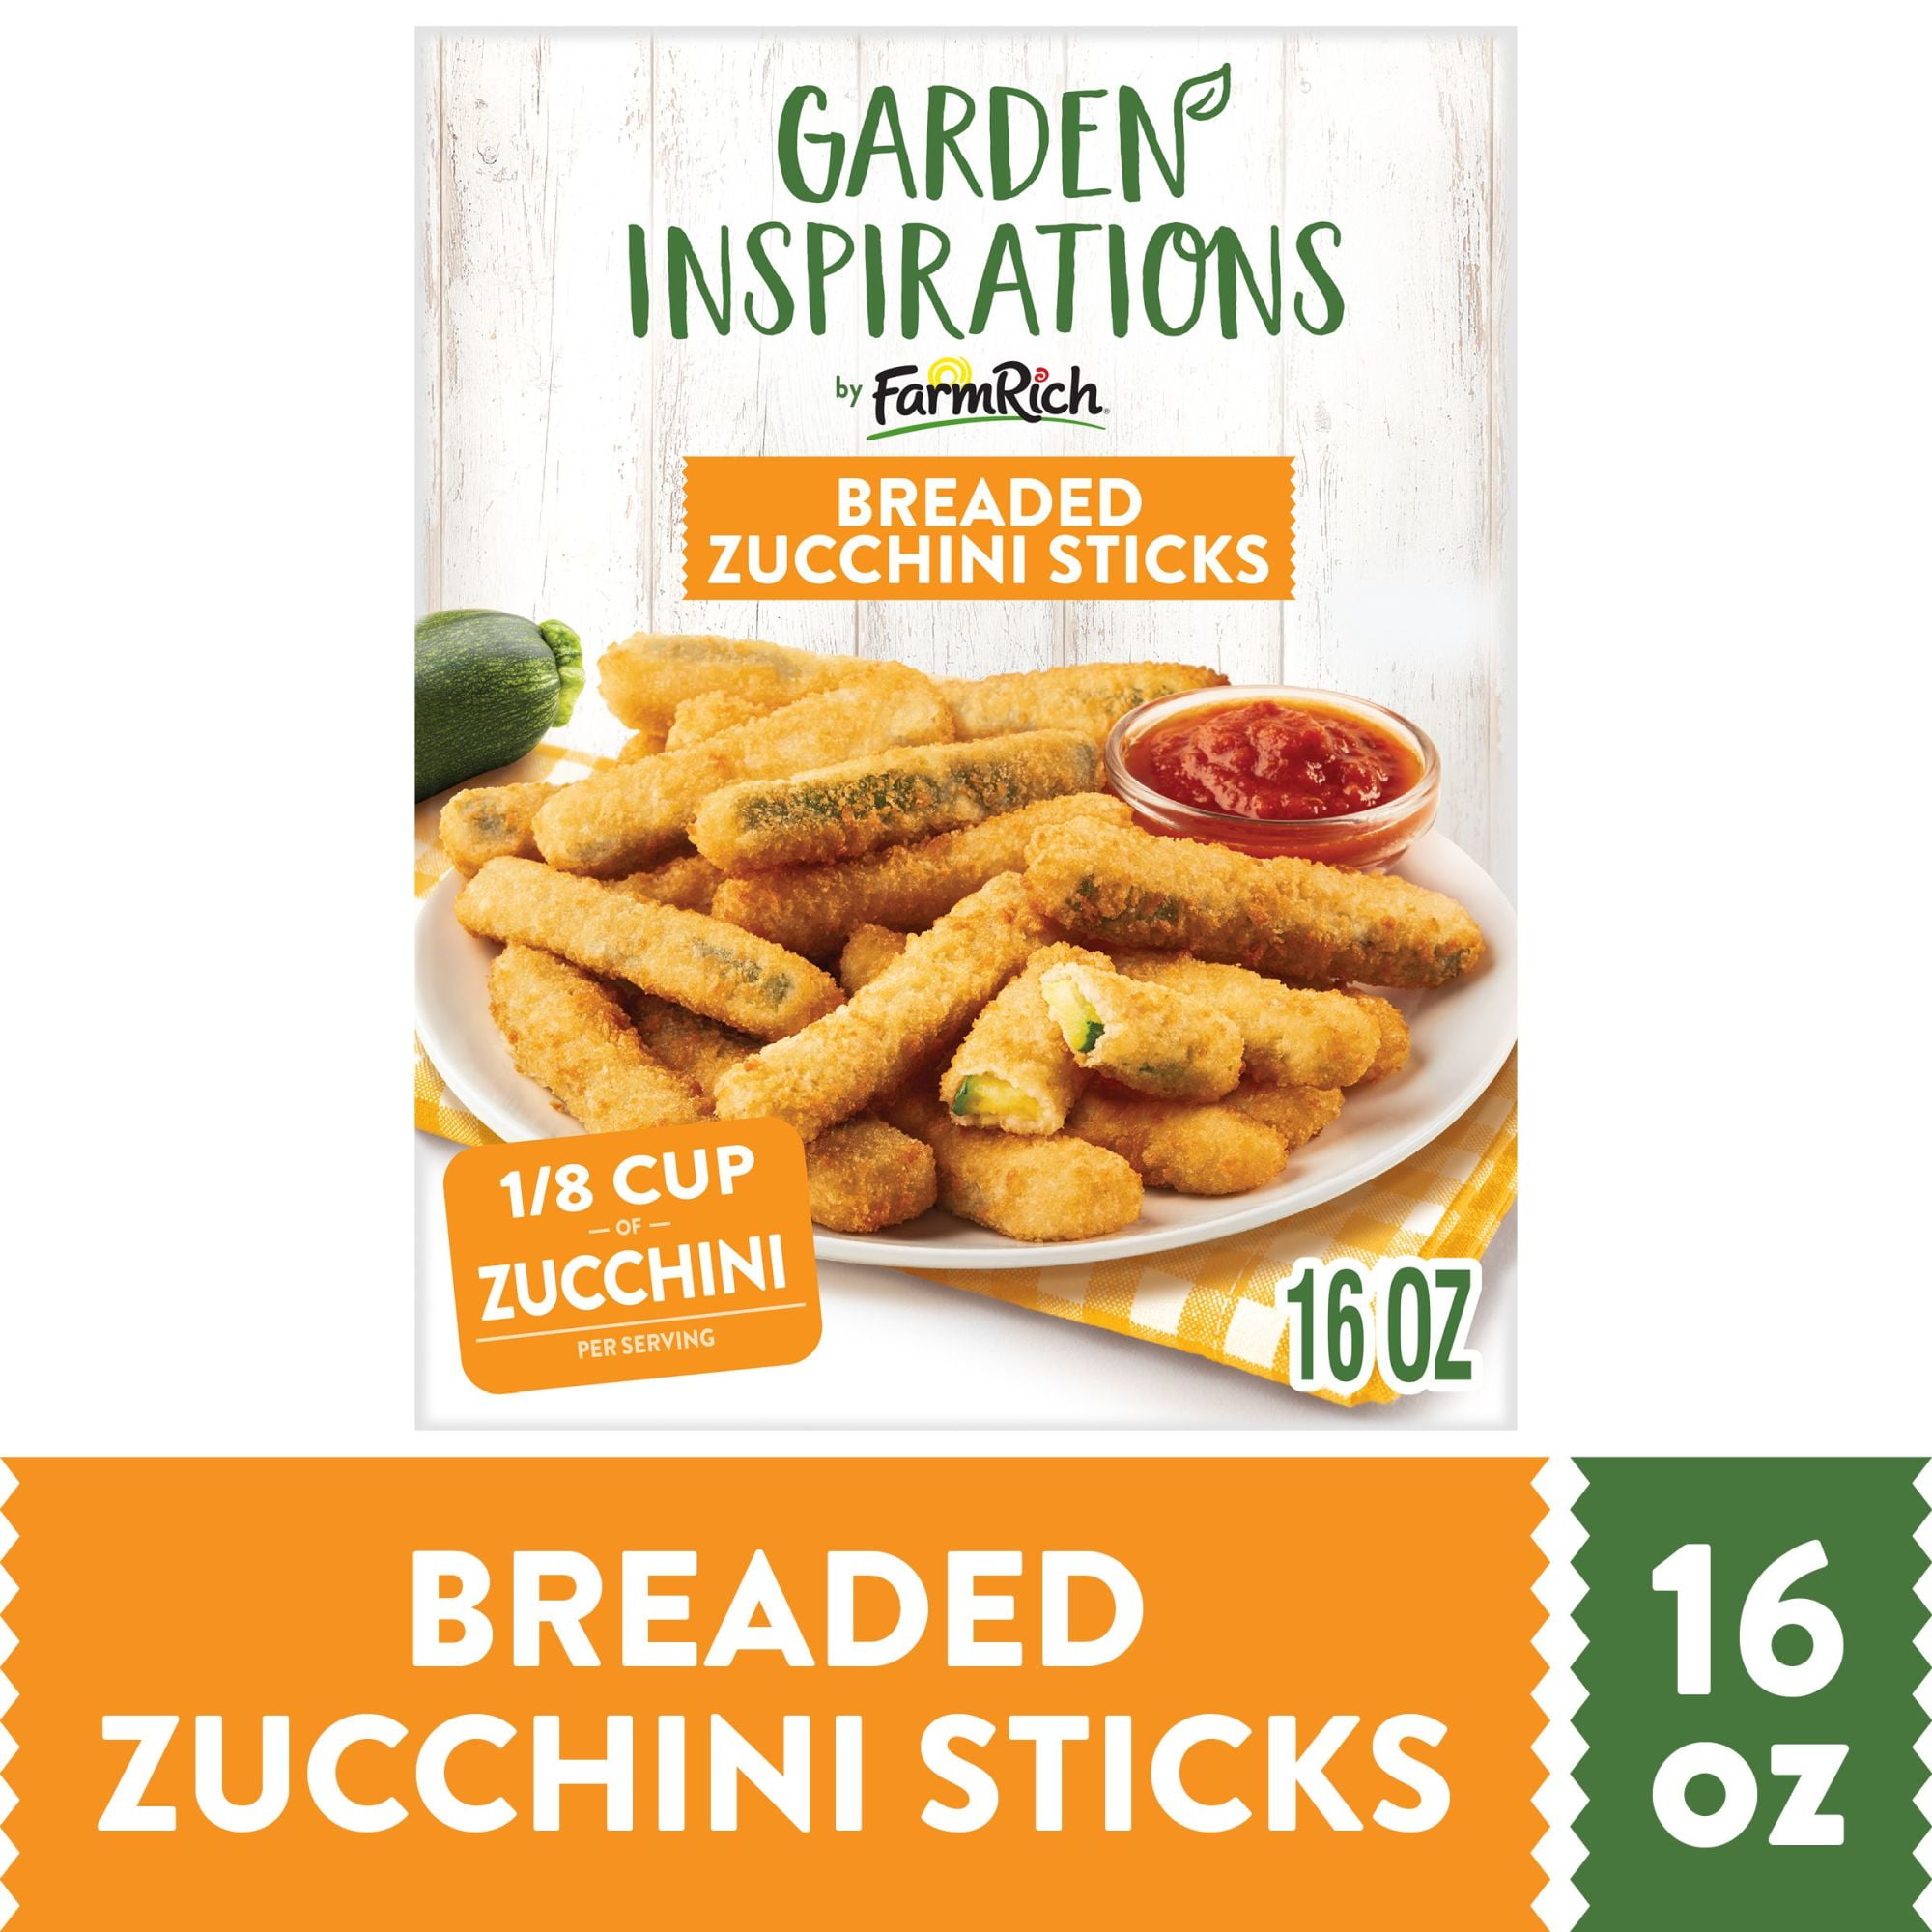 Farm Rich Garden Inspirations Zucchini Sticks with Marinara Sauce, Frozen, 16 oz